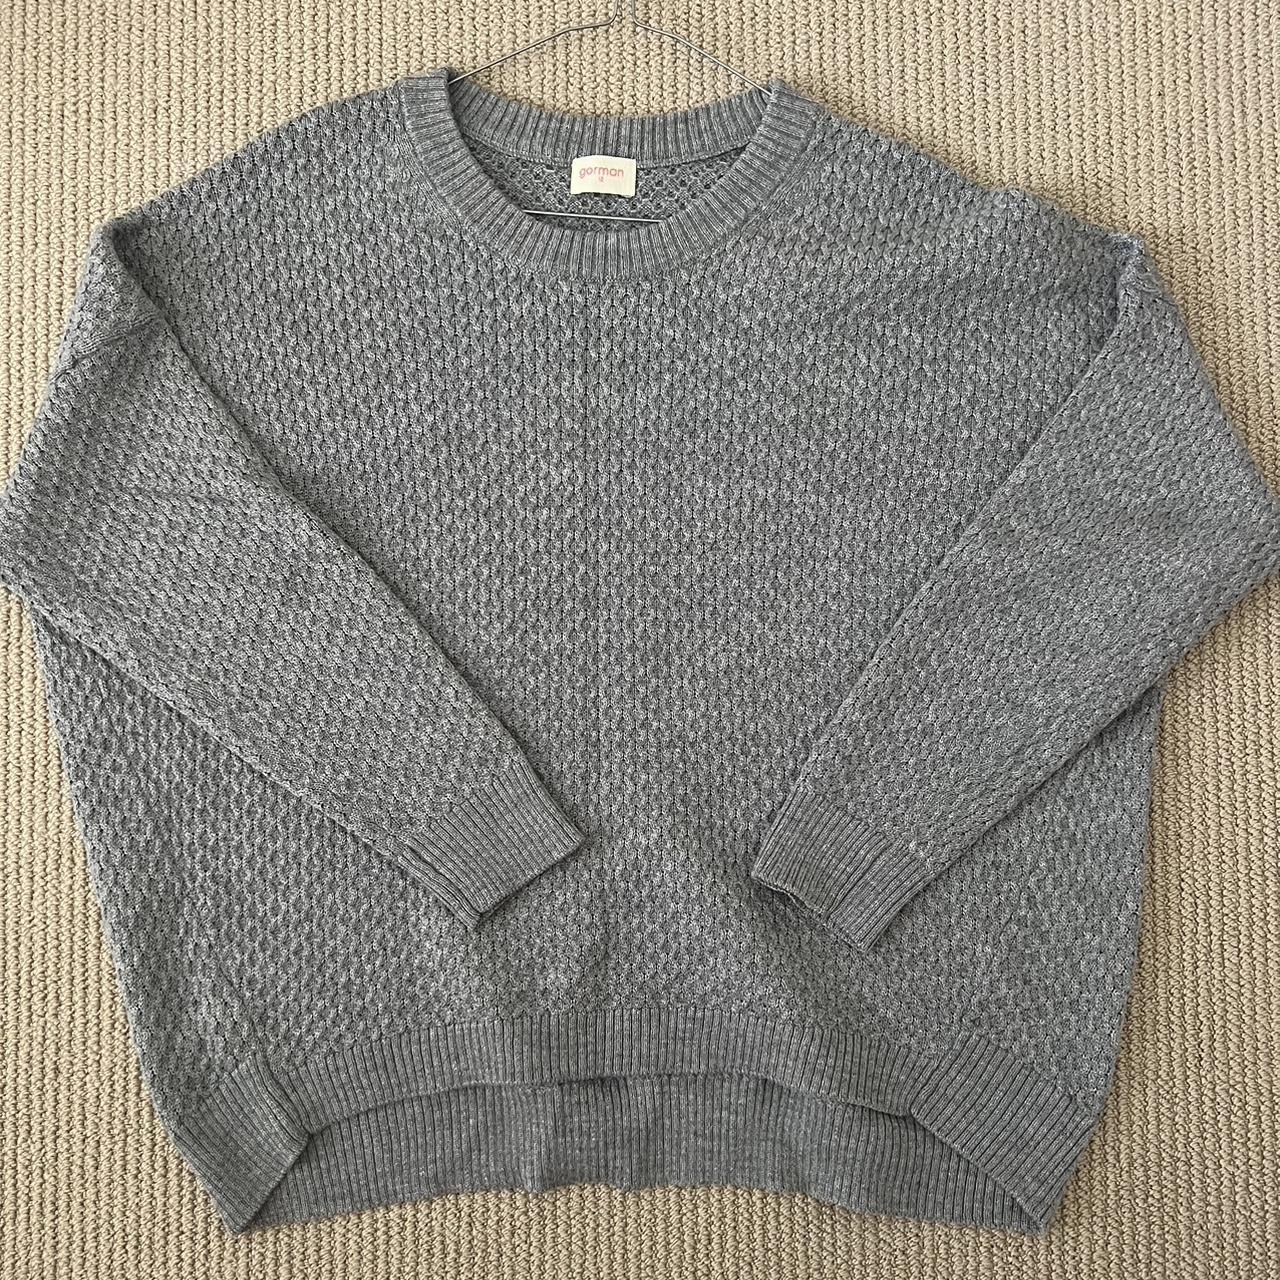 Gorman grey knit Medium thickness Oversized... - Depop